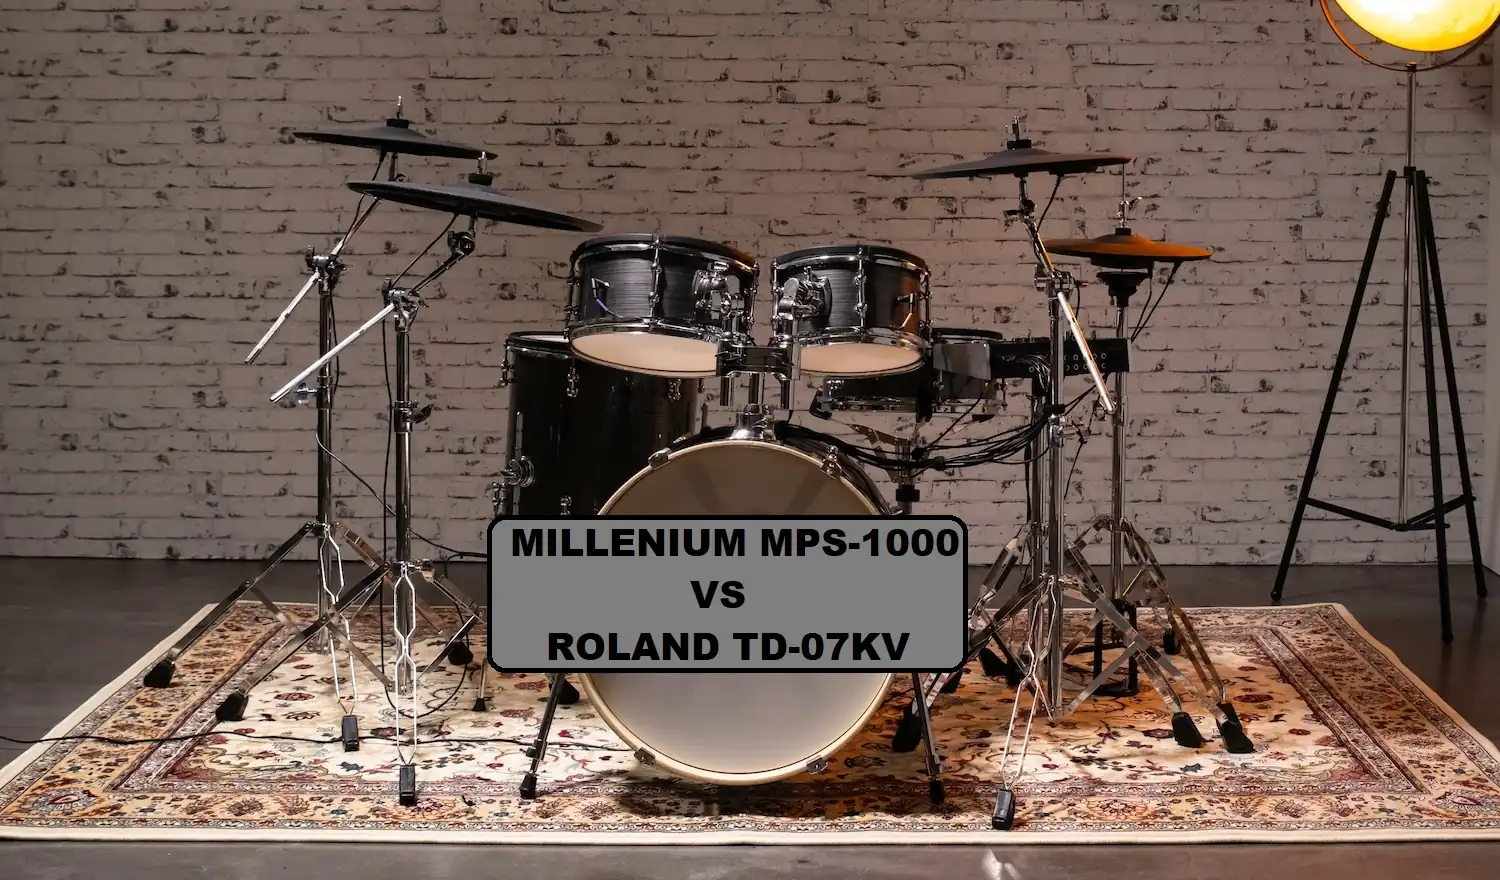 Millenium MPS-1000 vs Roland TD-07KV